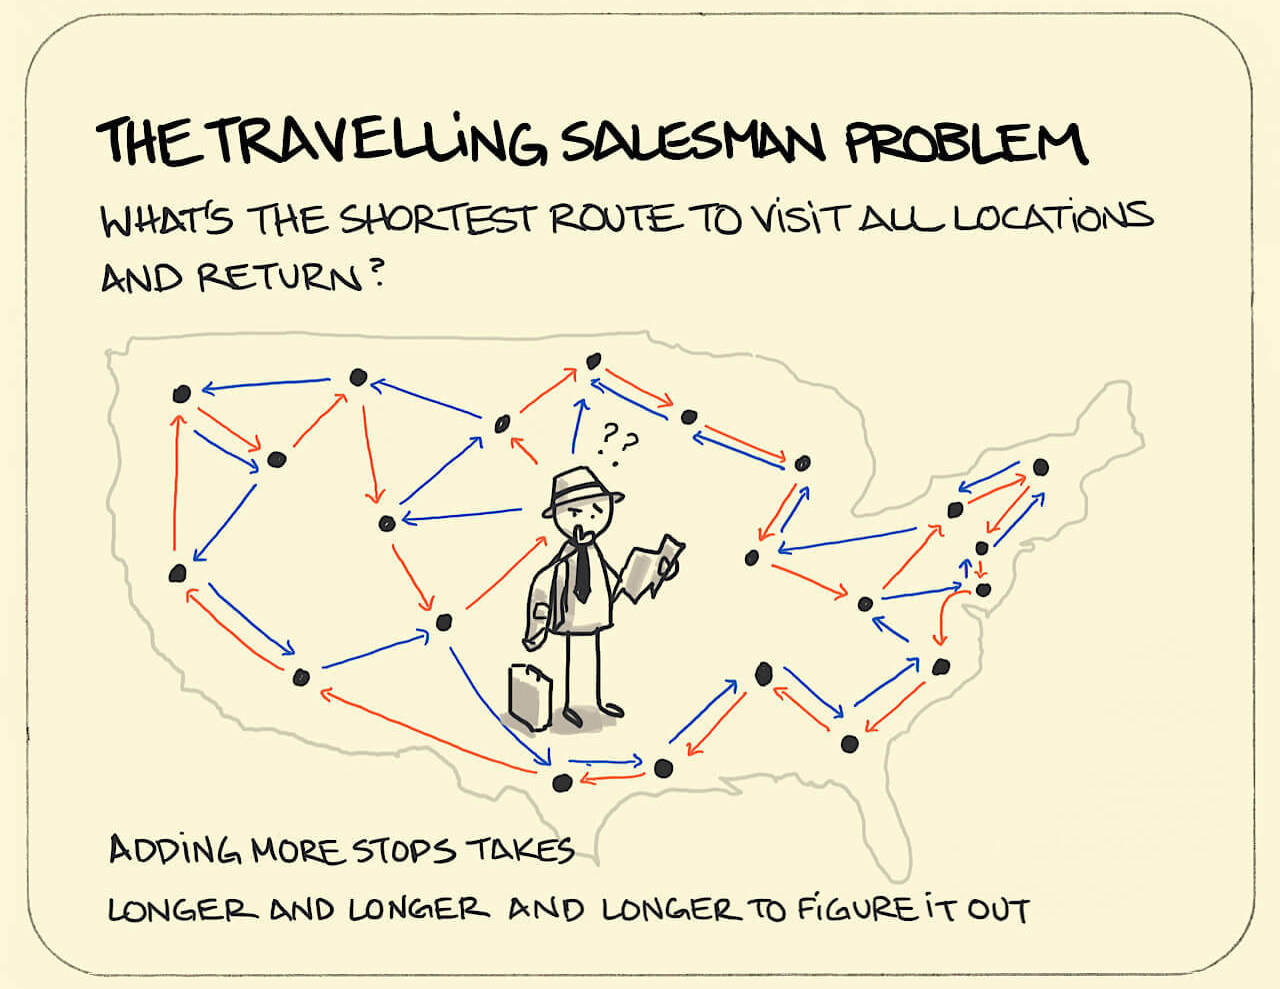 solve the travelling salesman problem